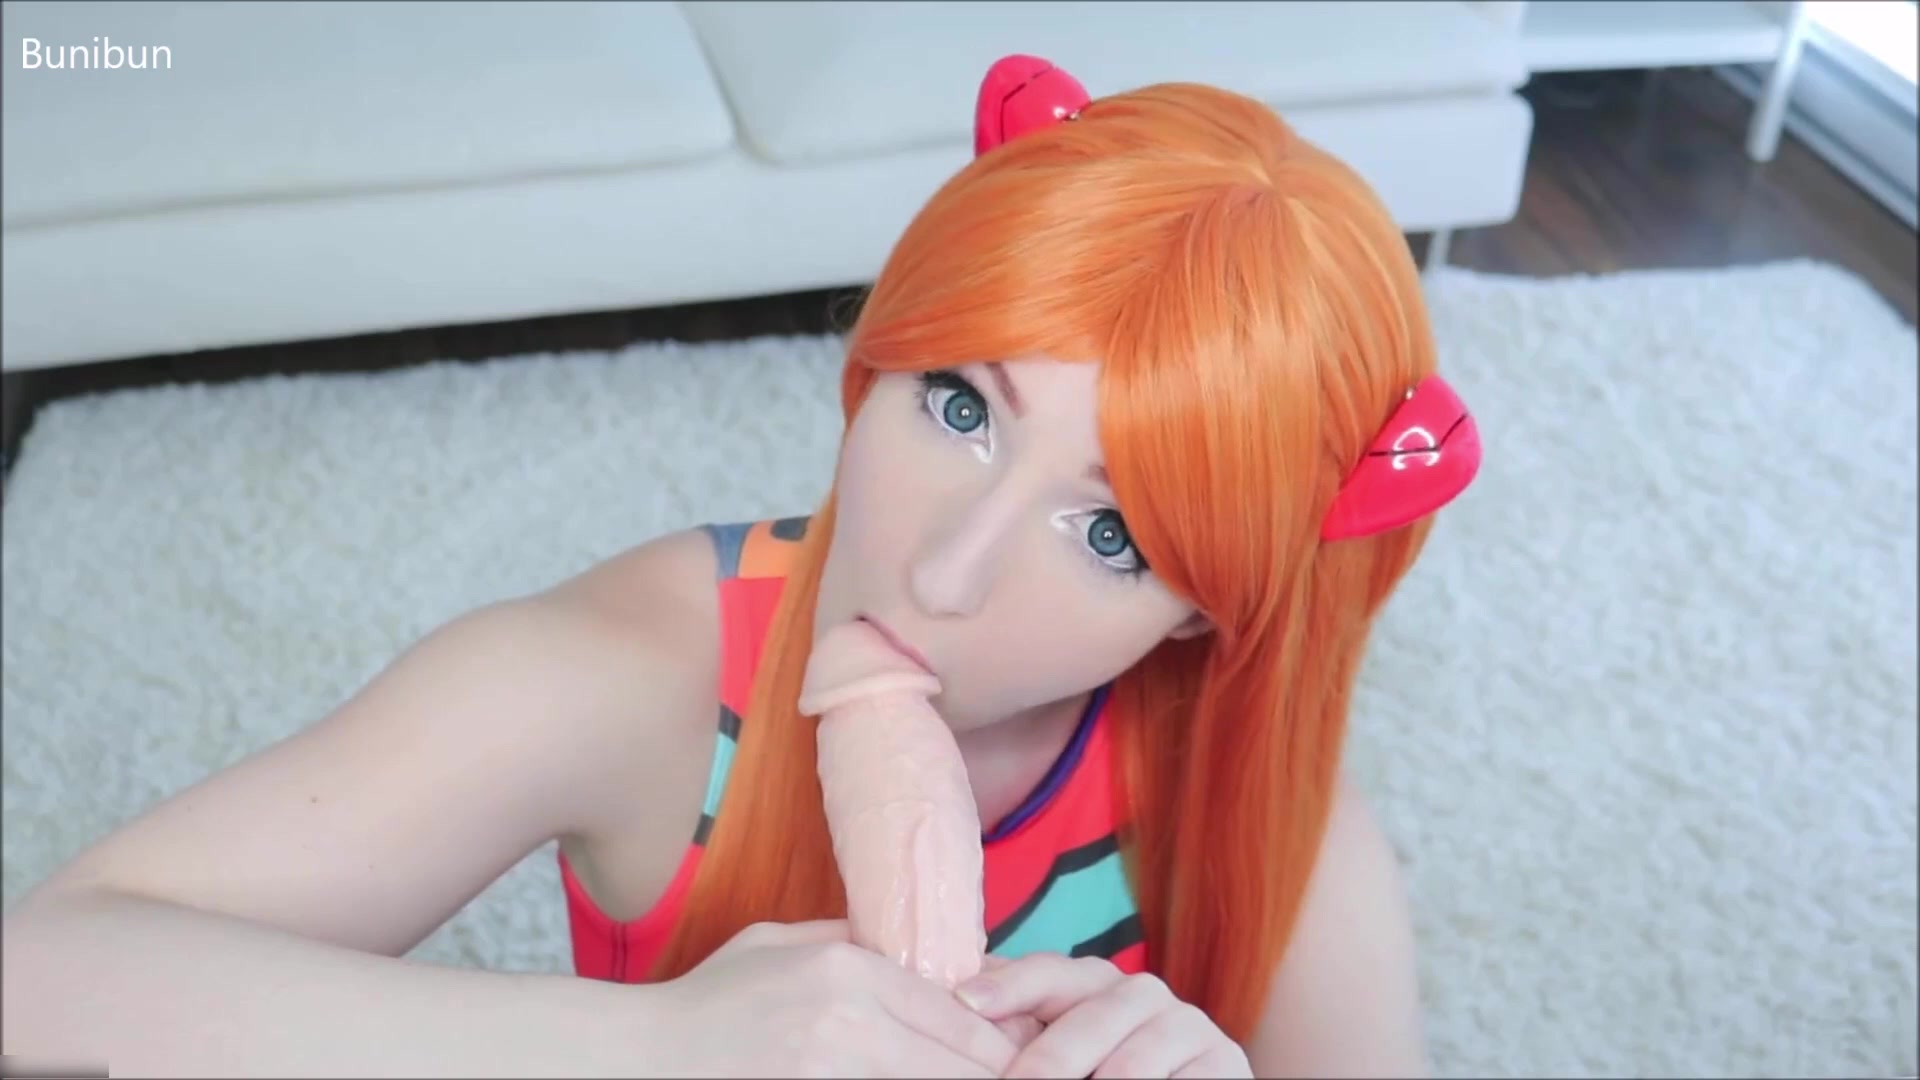 BuniBun_ Asuka Sucks You Off MFC cosplay BJ nude webcam video